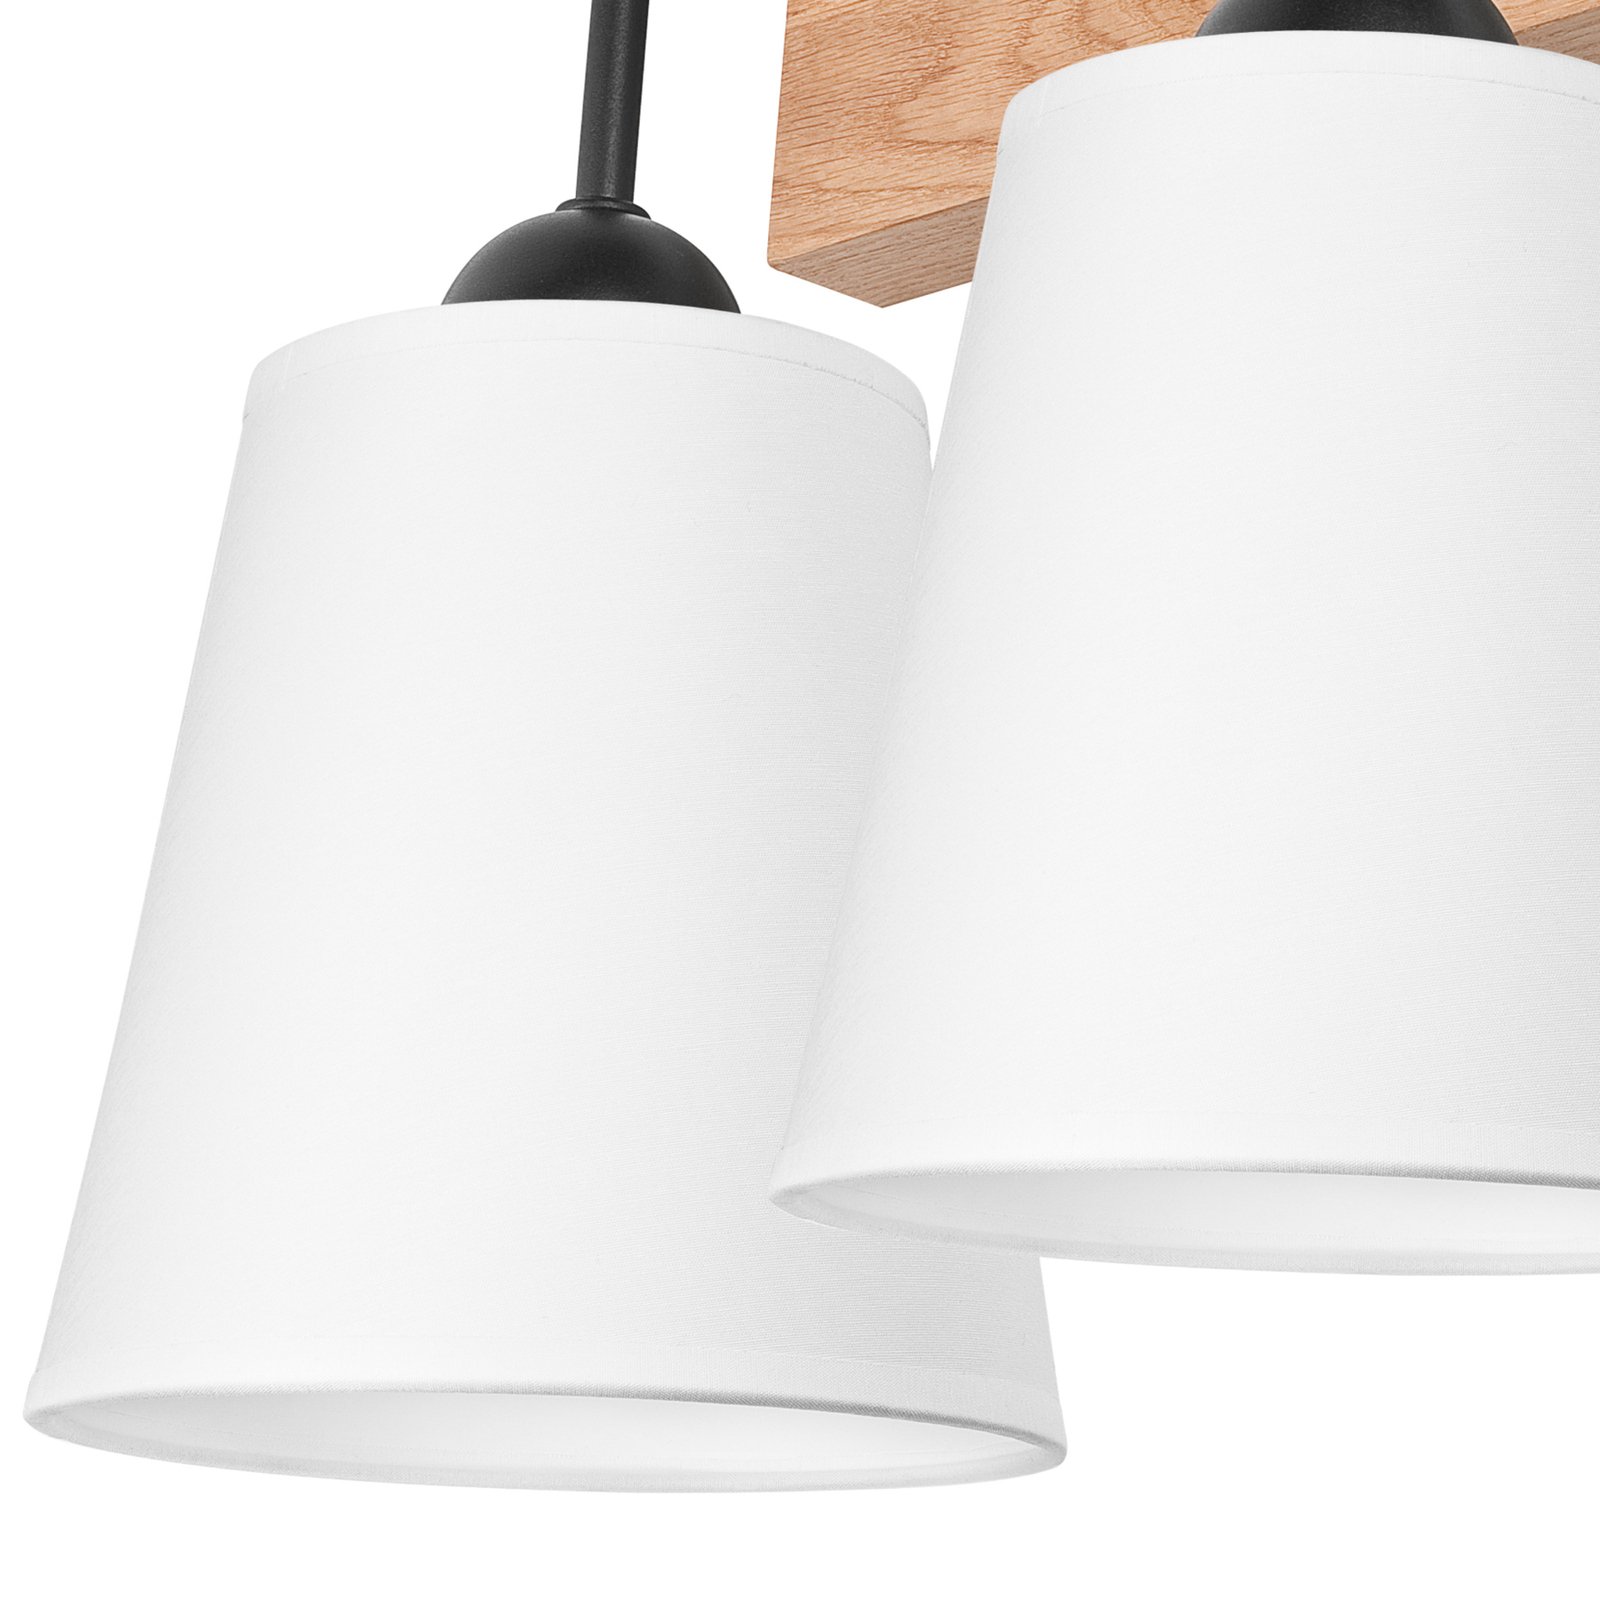 Envostar Risco wall light 2-bulb fabric shade white